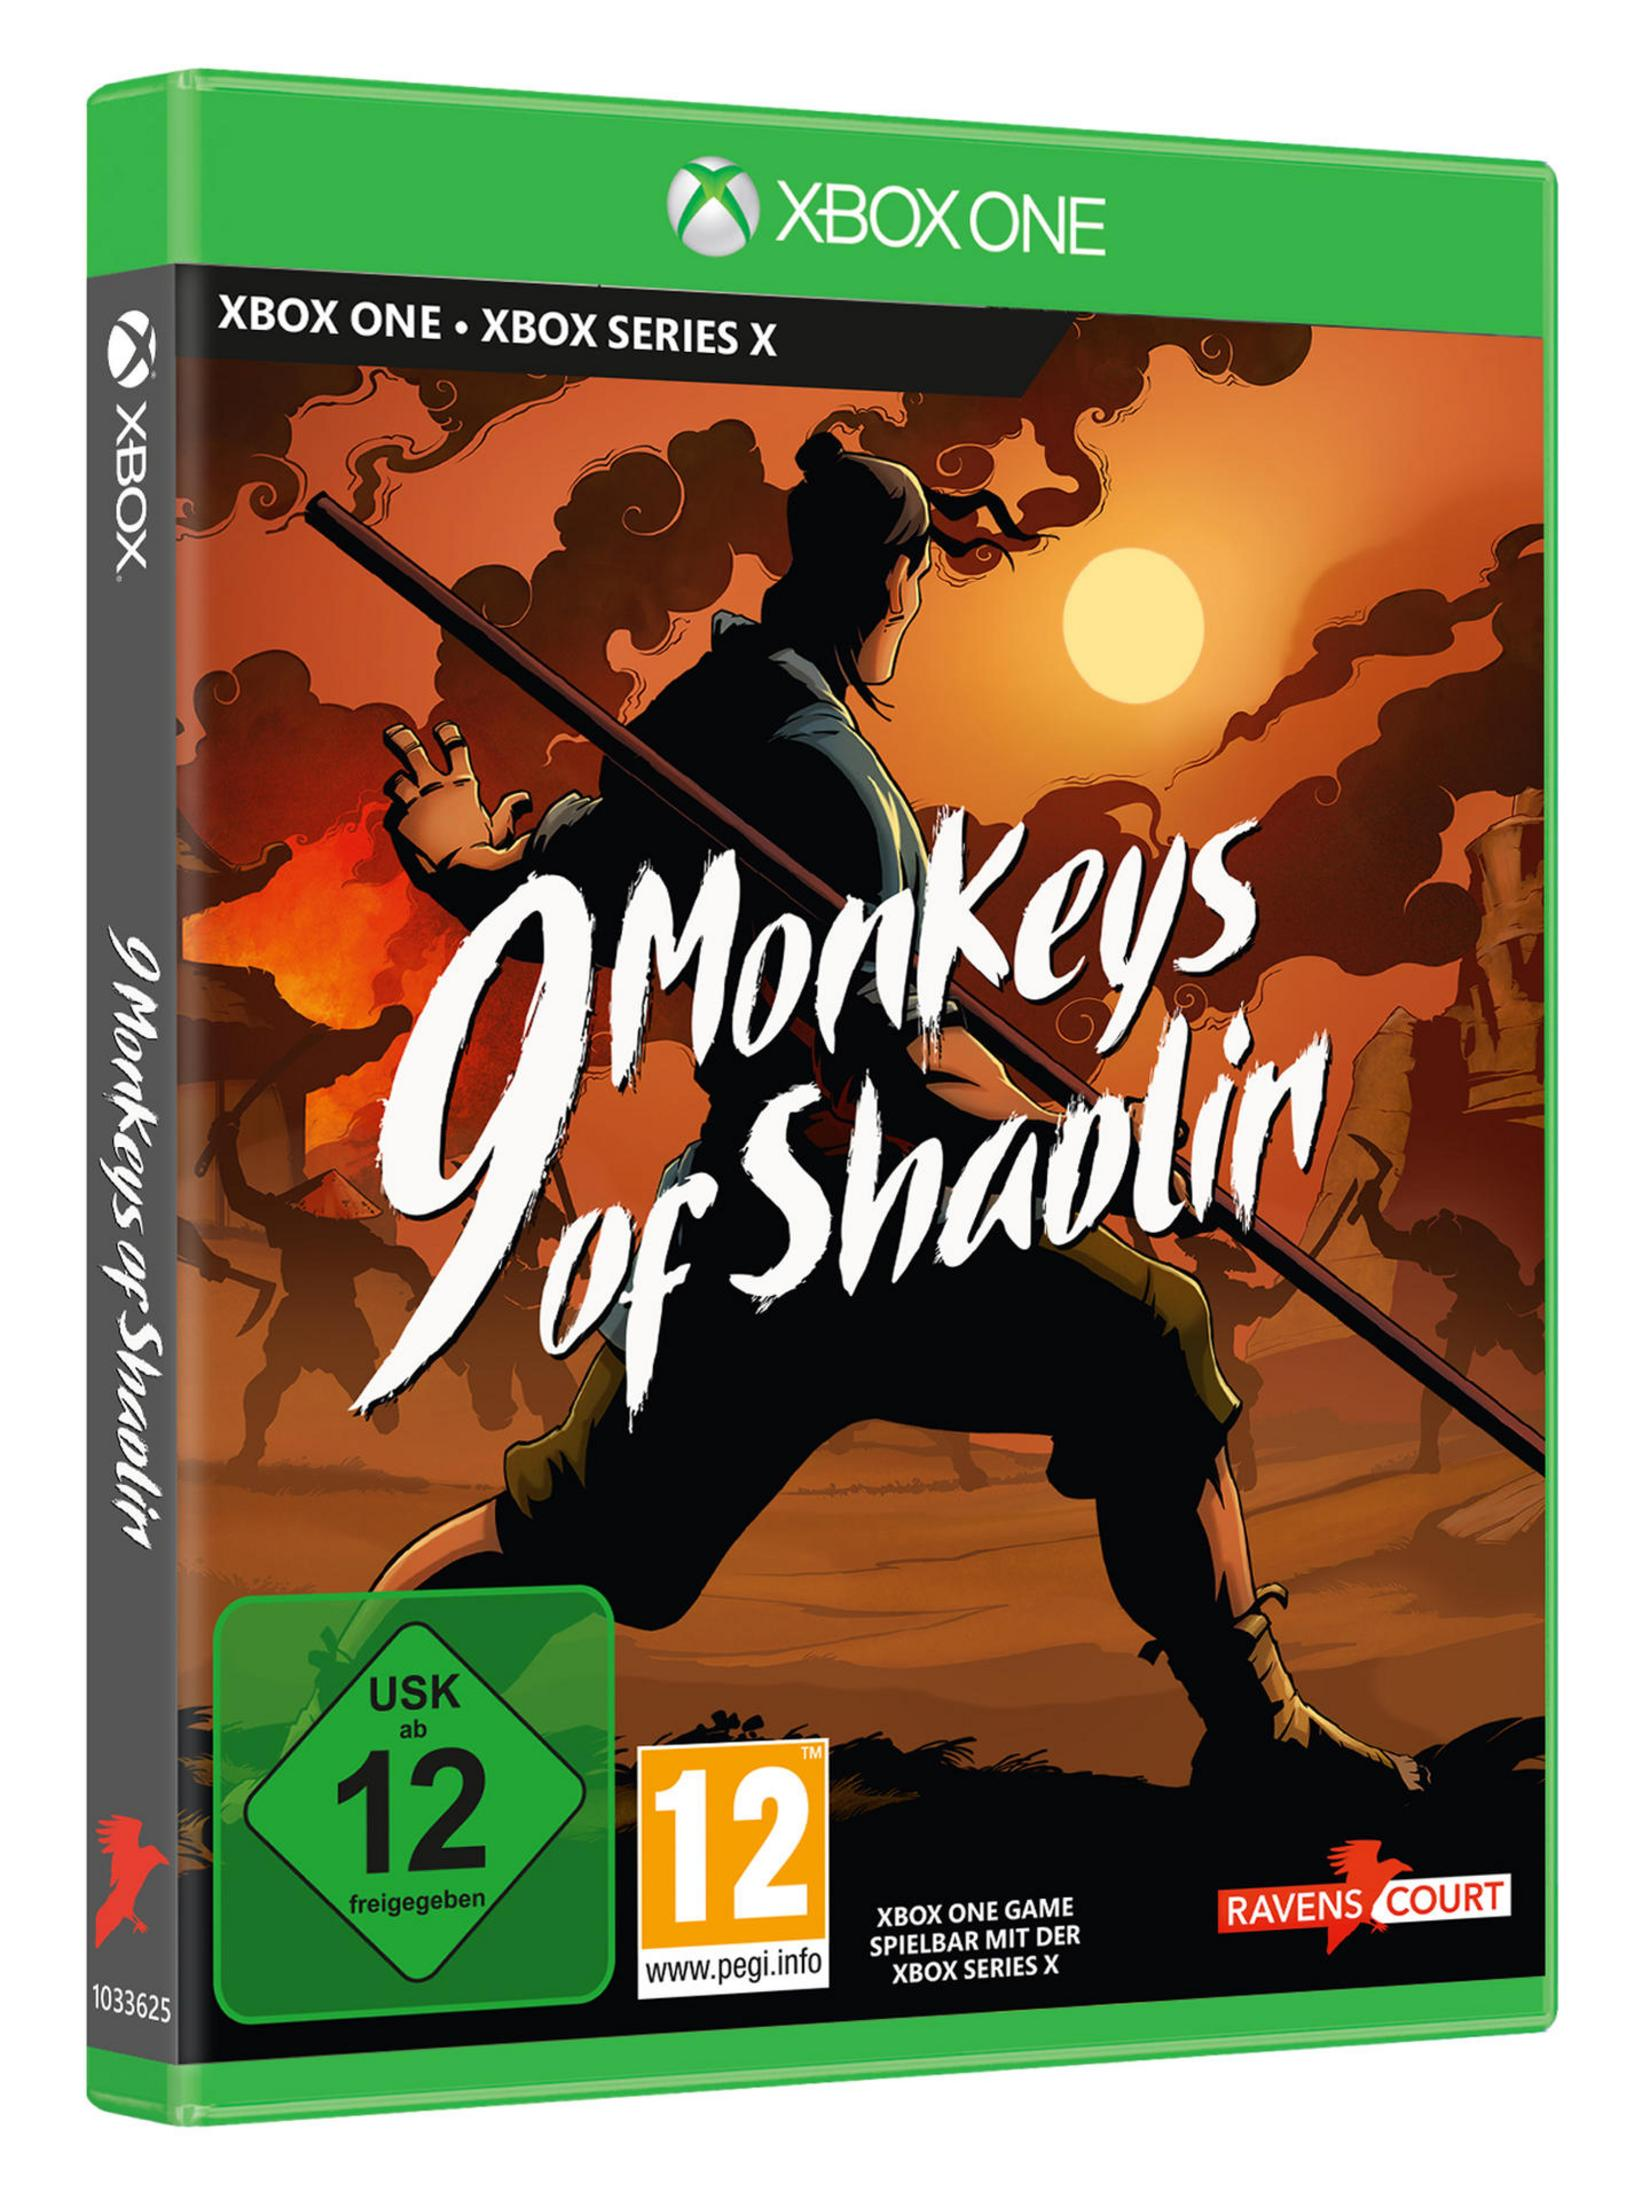 9 Monkeys of One] - Shaolin [Xbox